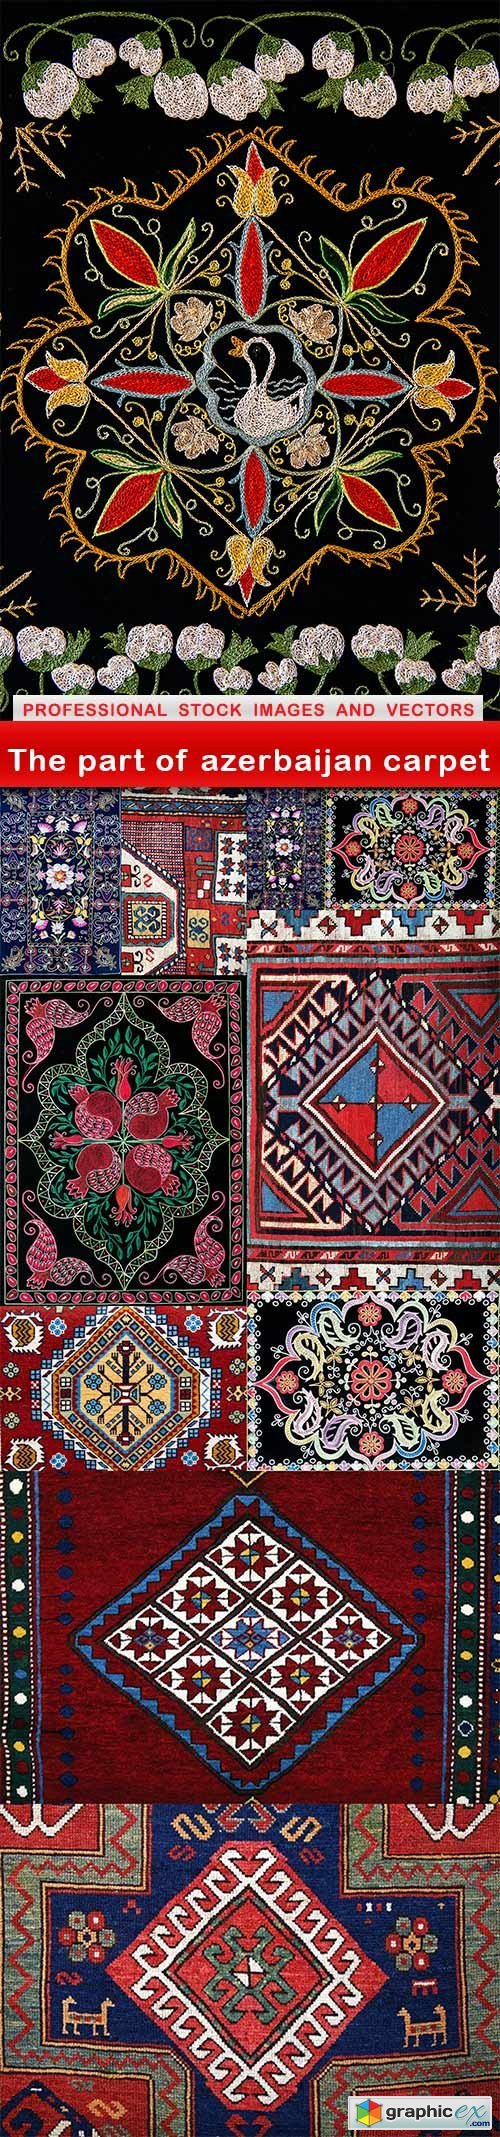 The part of azerbaijan carpet - 11 UHQ JPEG